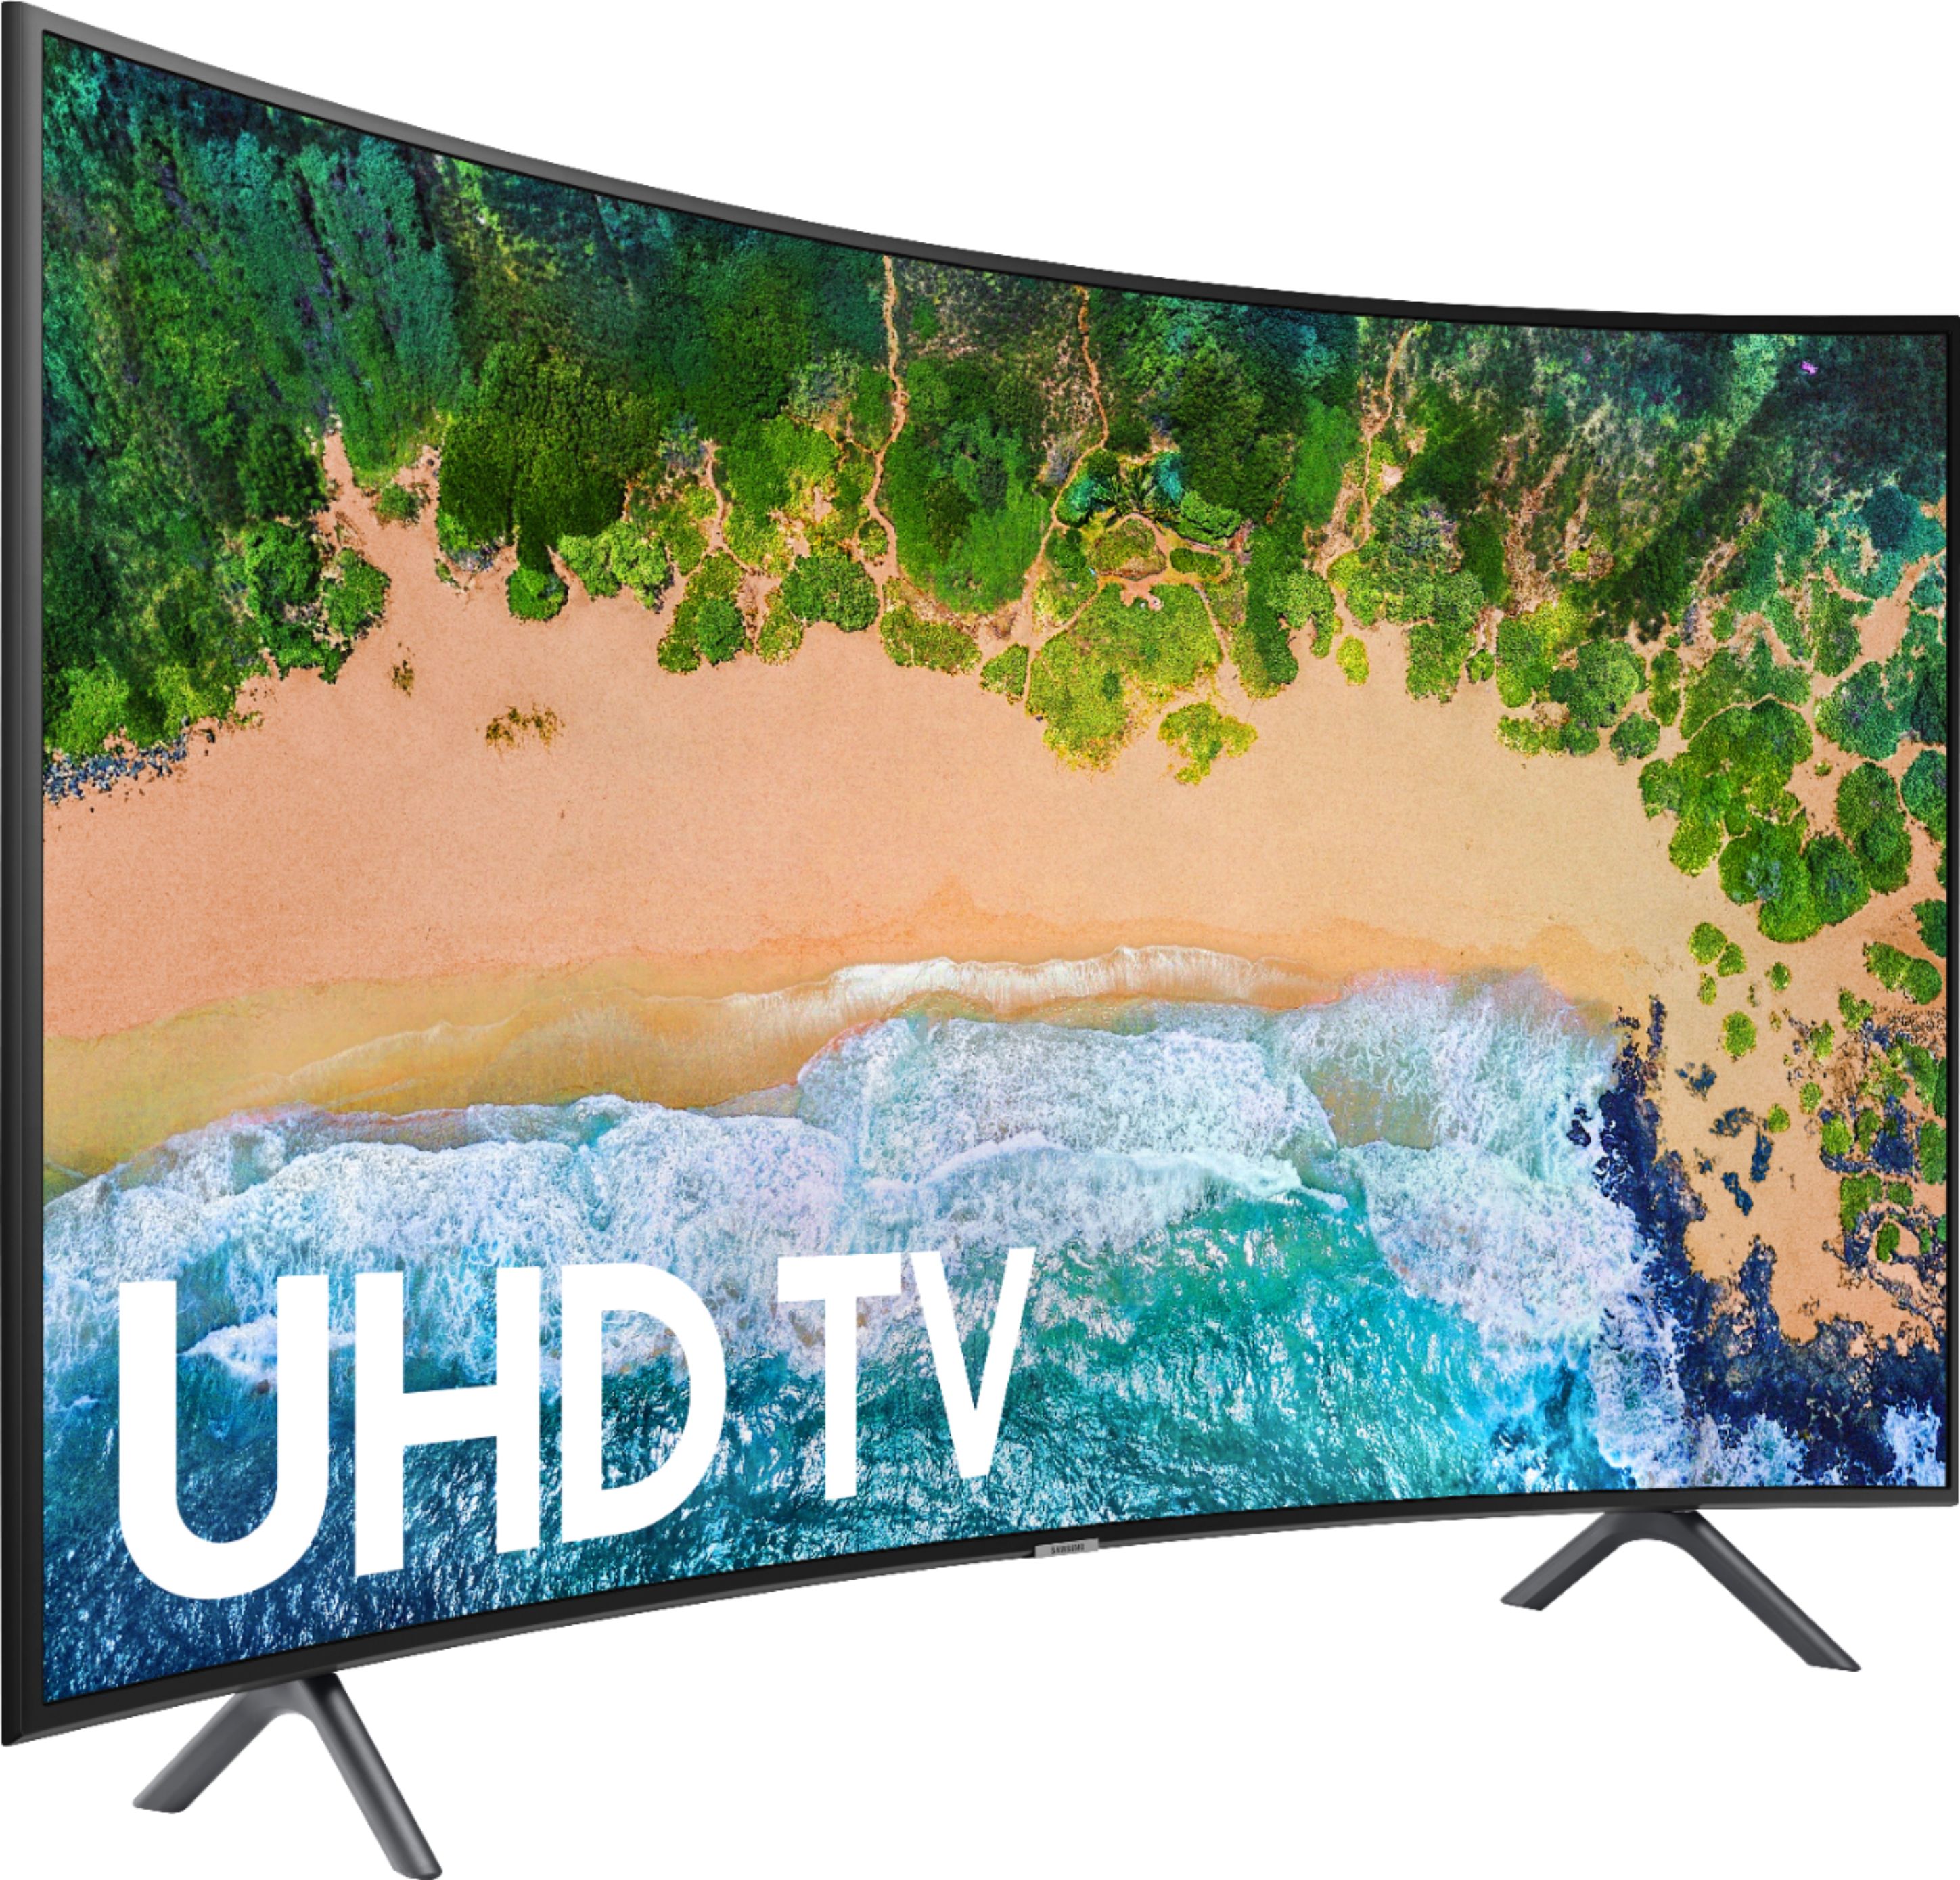 UHD 4K Curved Smart TV RU7300 55 - Specs & Price